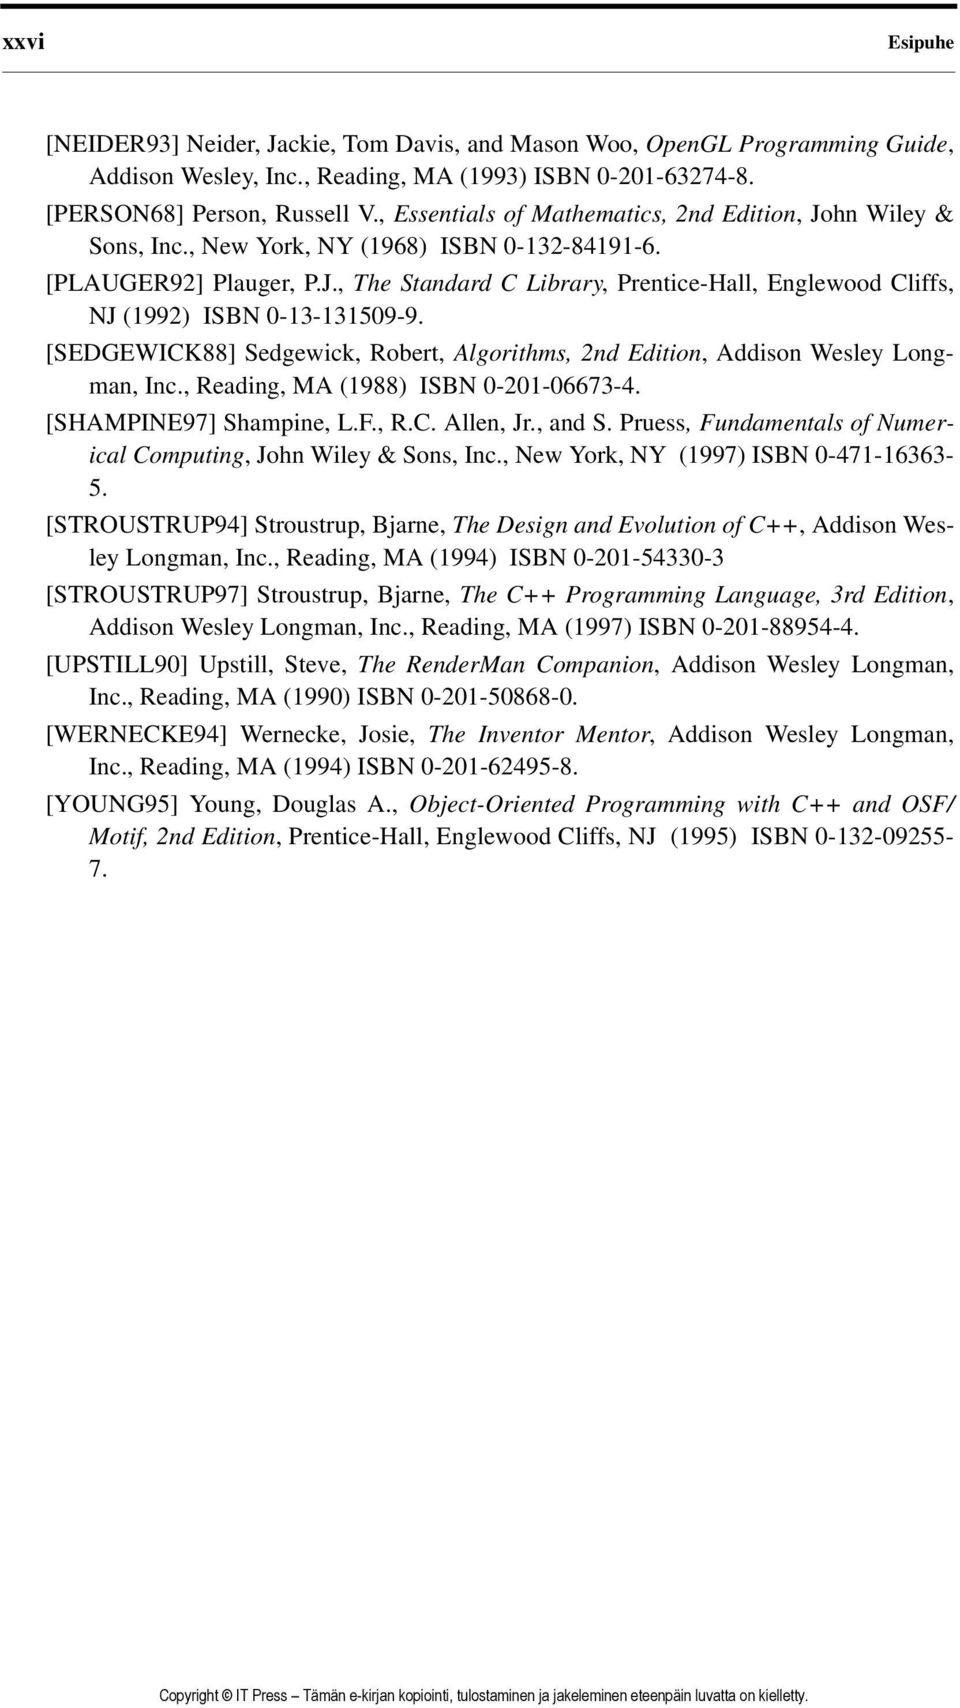 [SEDGEWICK88] Sedgewick, Robert, Algorithms, 2nd Edition, Addison Wesley Longman, Inc., Reading, MA (1988) ISBN 0-201-06673-4. [SHAMPINE97] Shampine, L.F., R.C. Allen, Jr., and S.